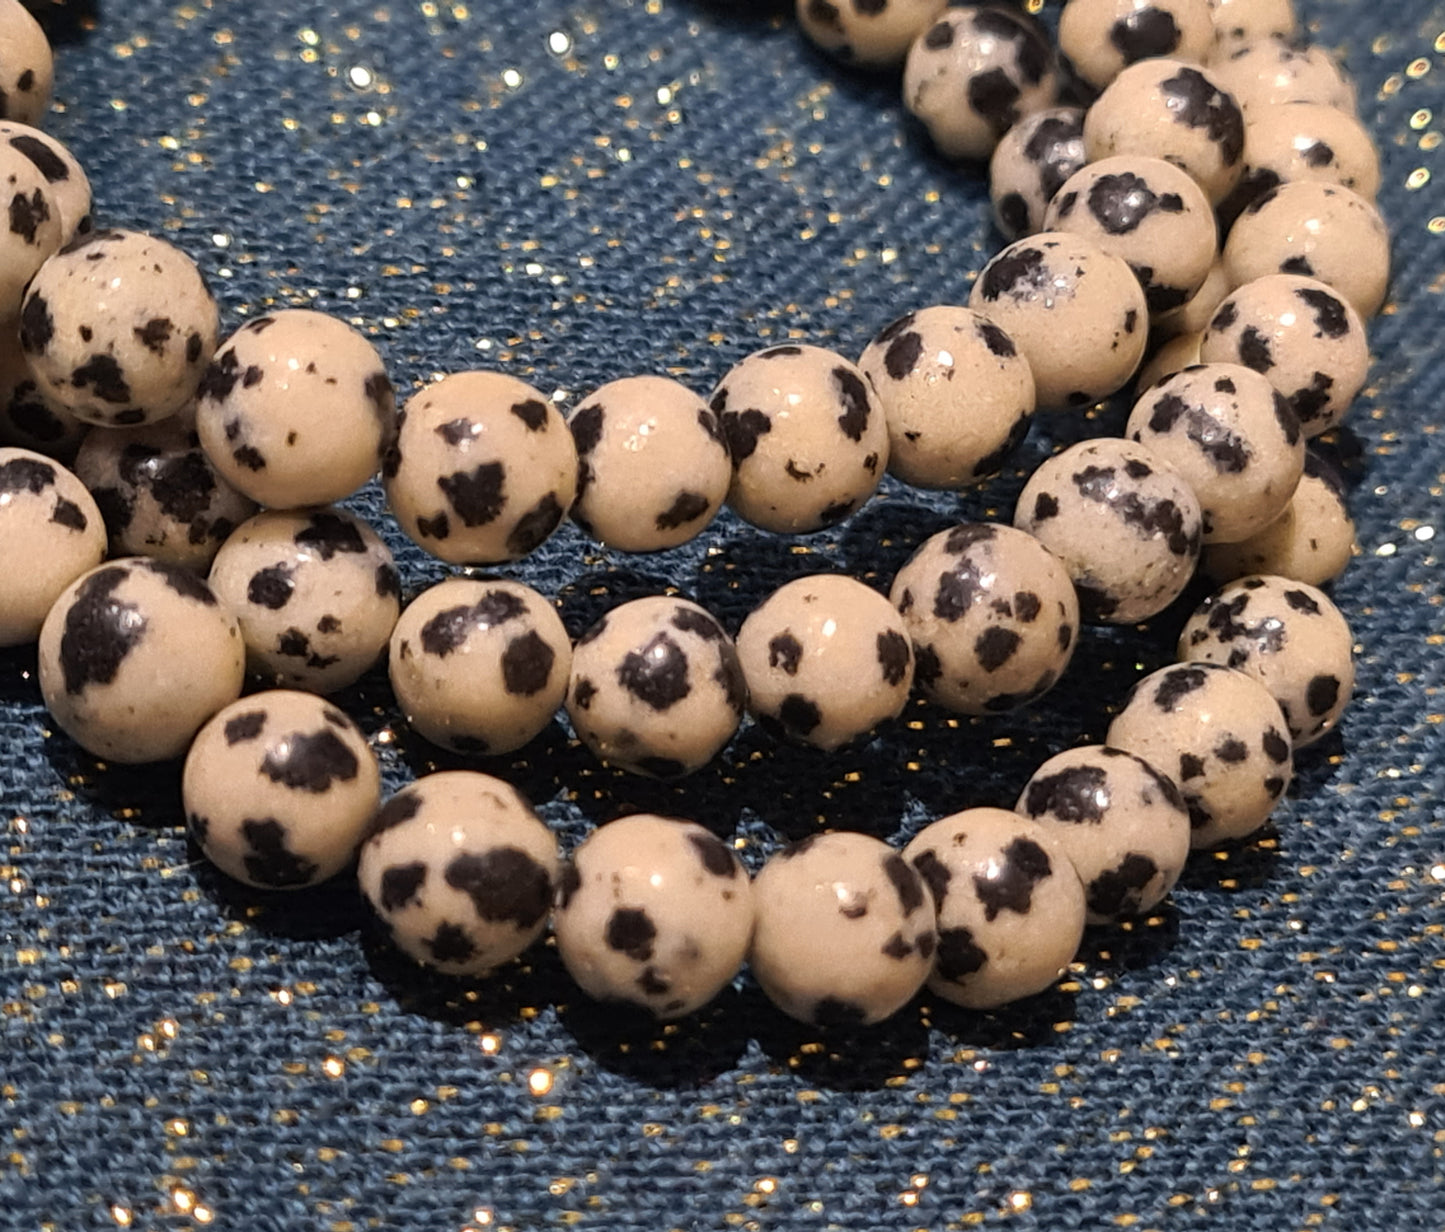 Showing three joyful dalmatian jasper bracelets, cream stone with black dot inclusions, each 6mm sized